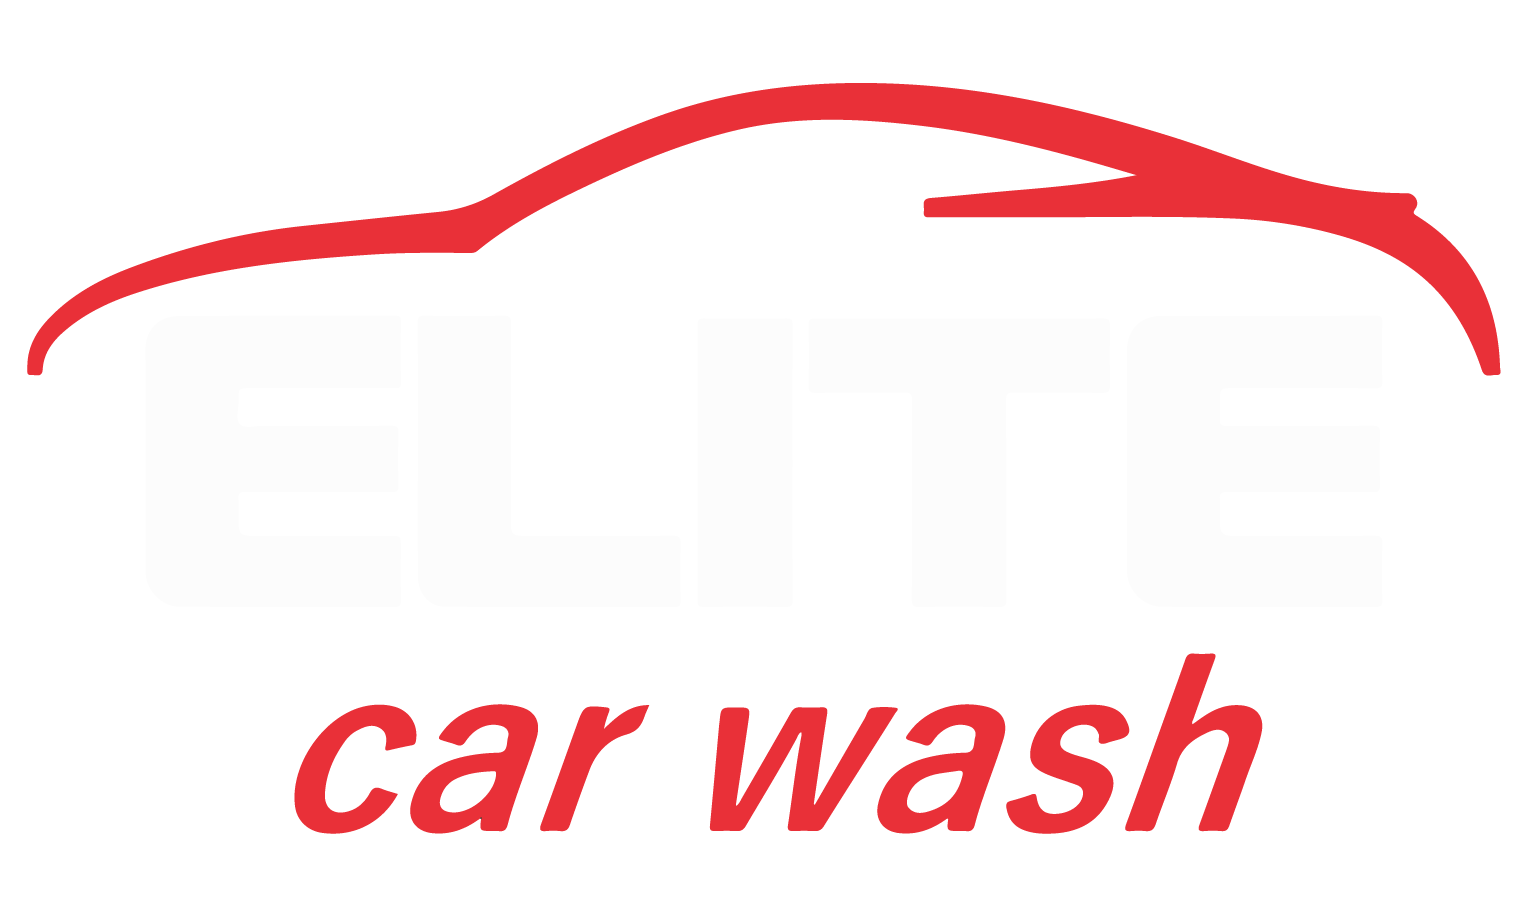 Elite Car Wash